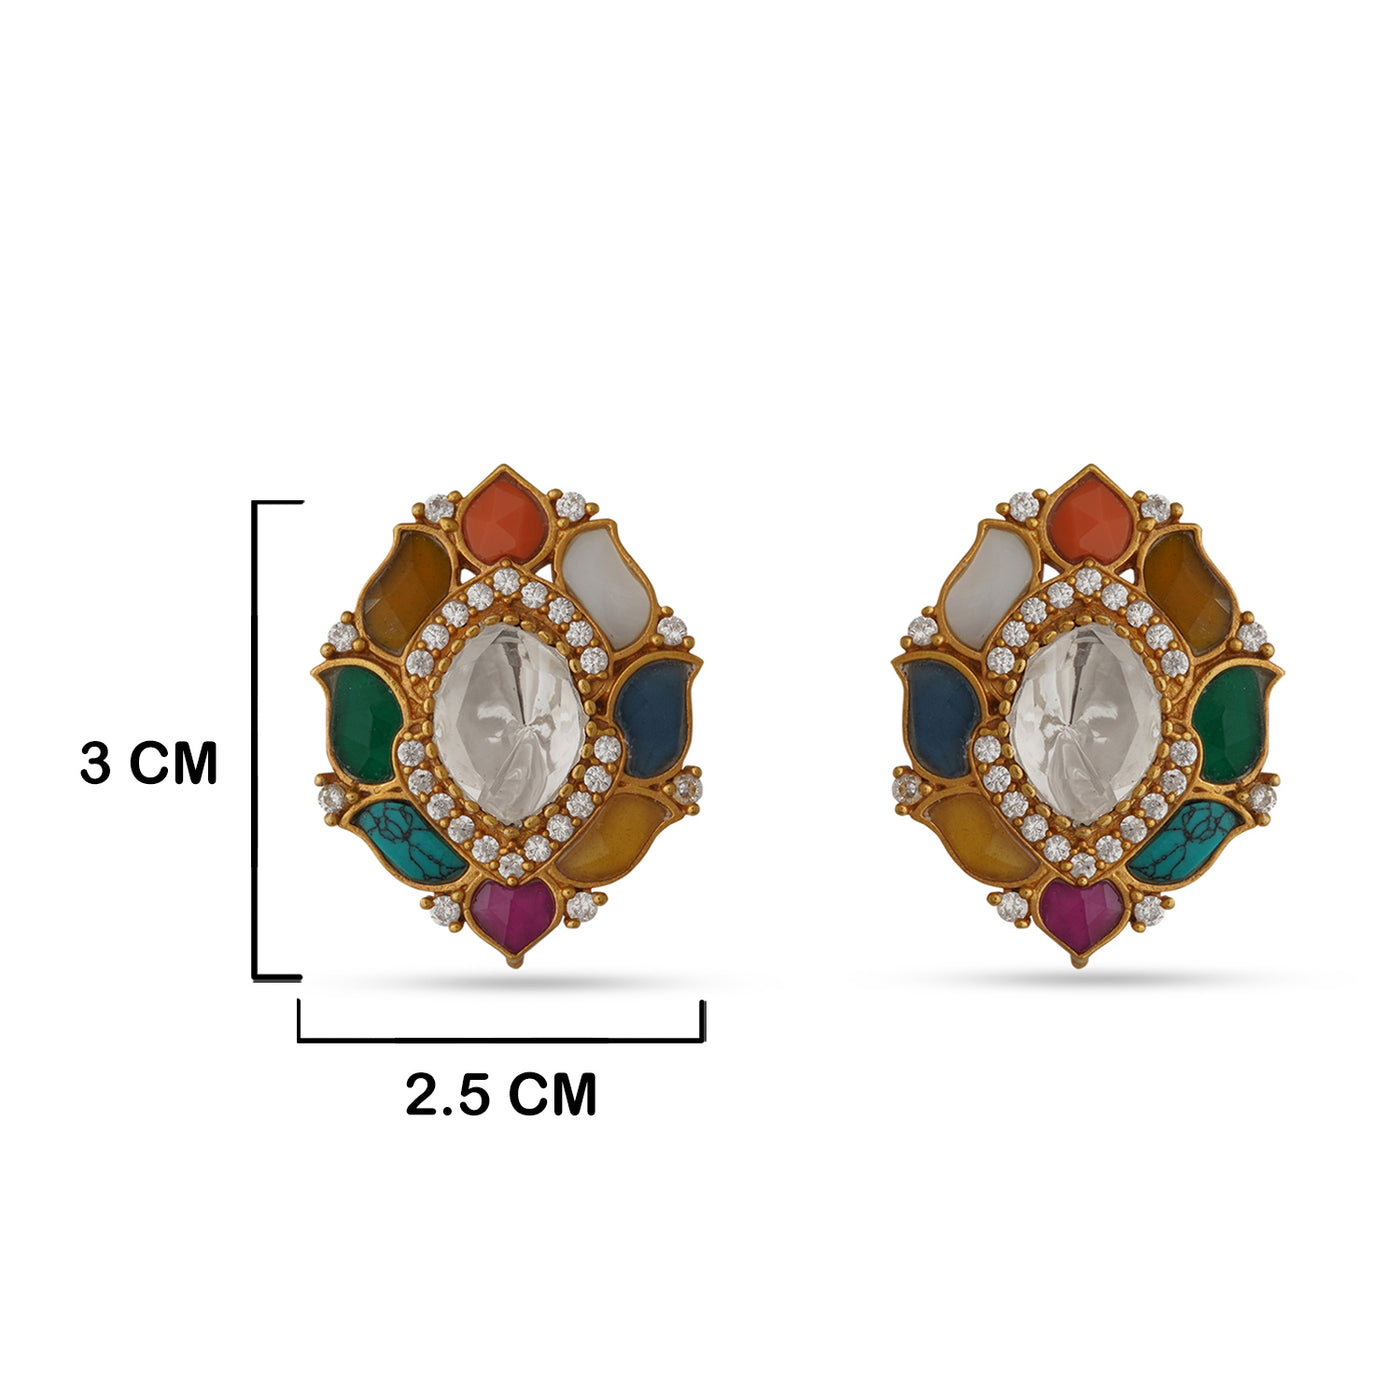 Gul-e-Rana - Navratna stud earrings